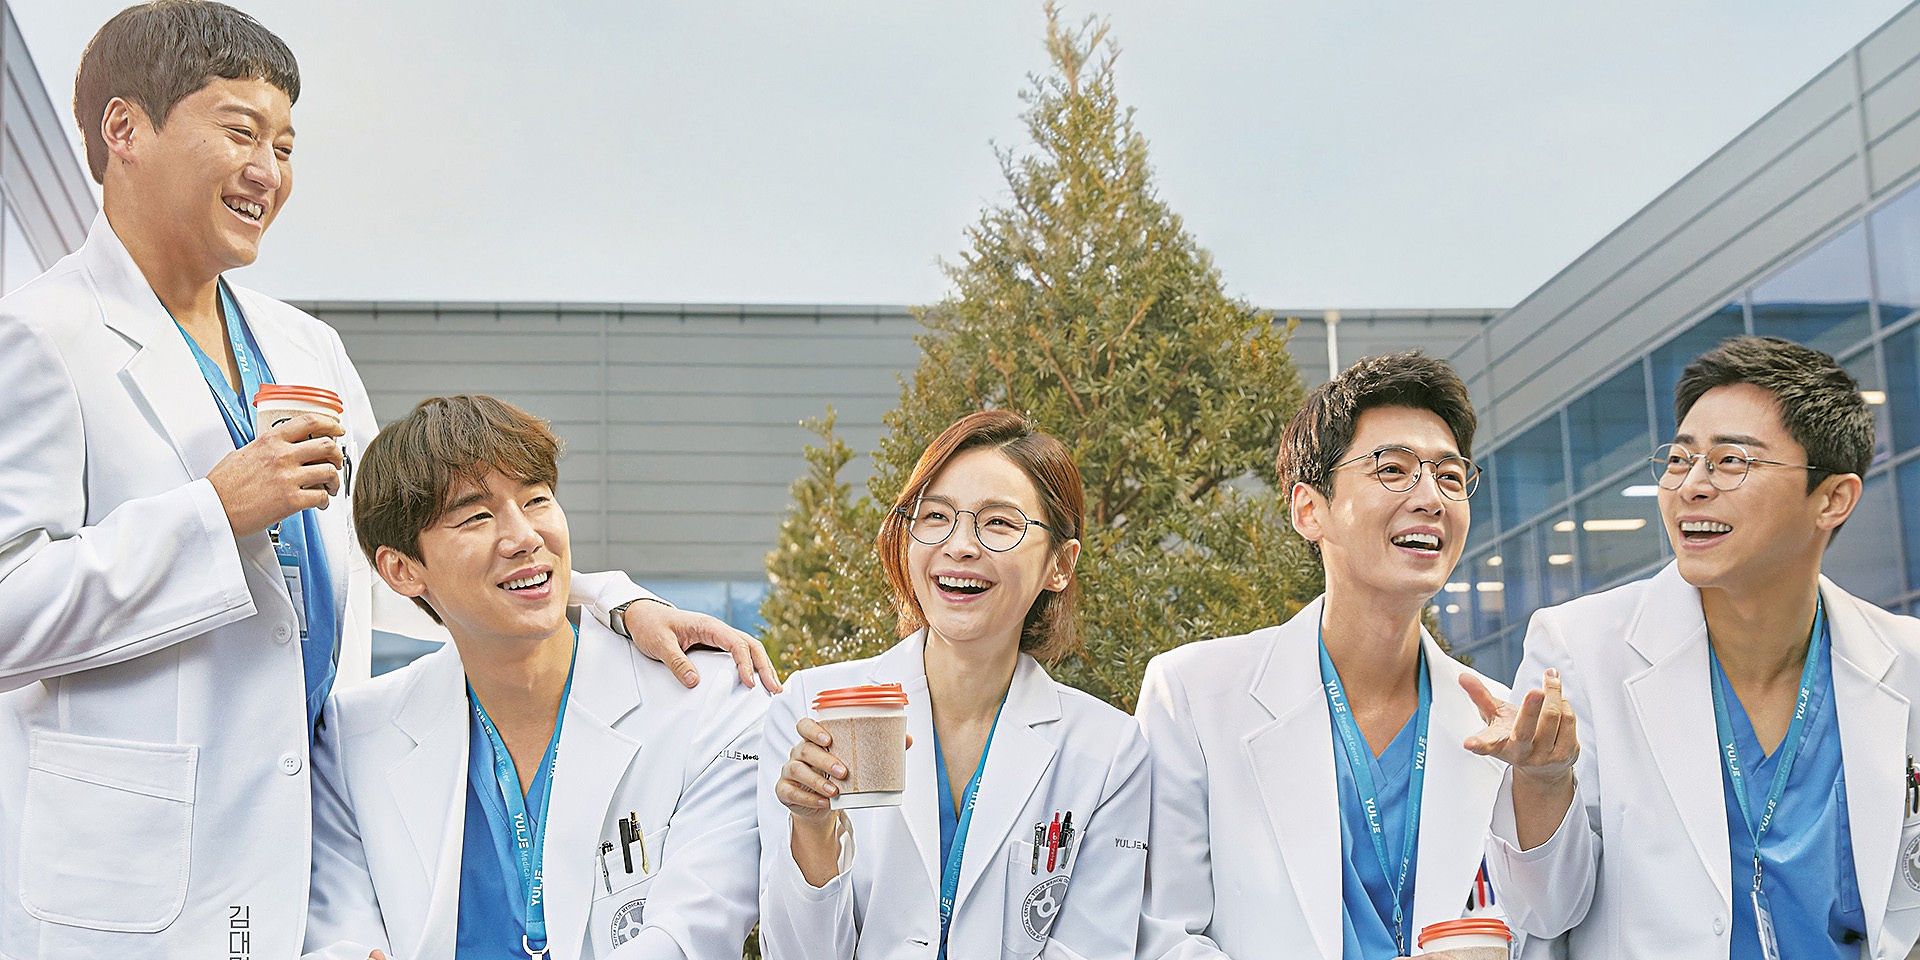 K-Drama Hospital Playlist cast laughing